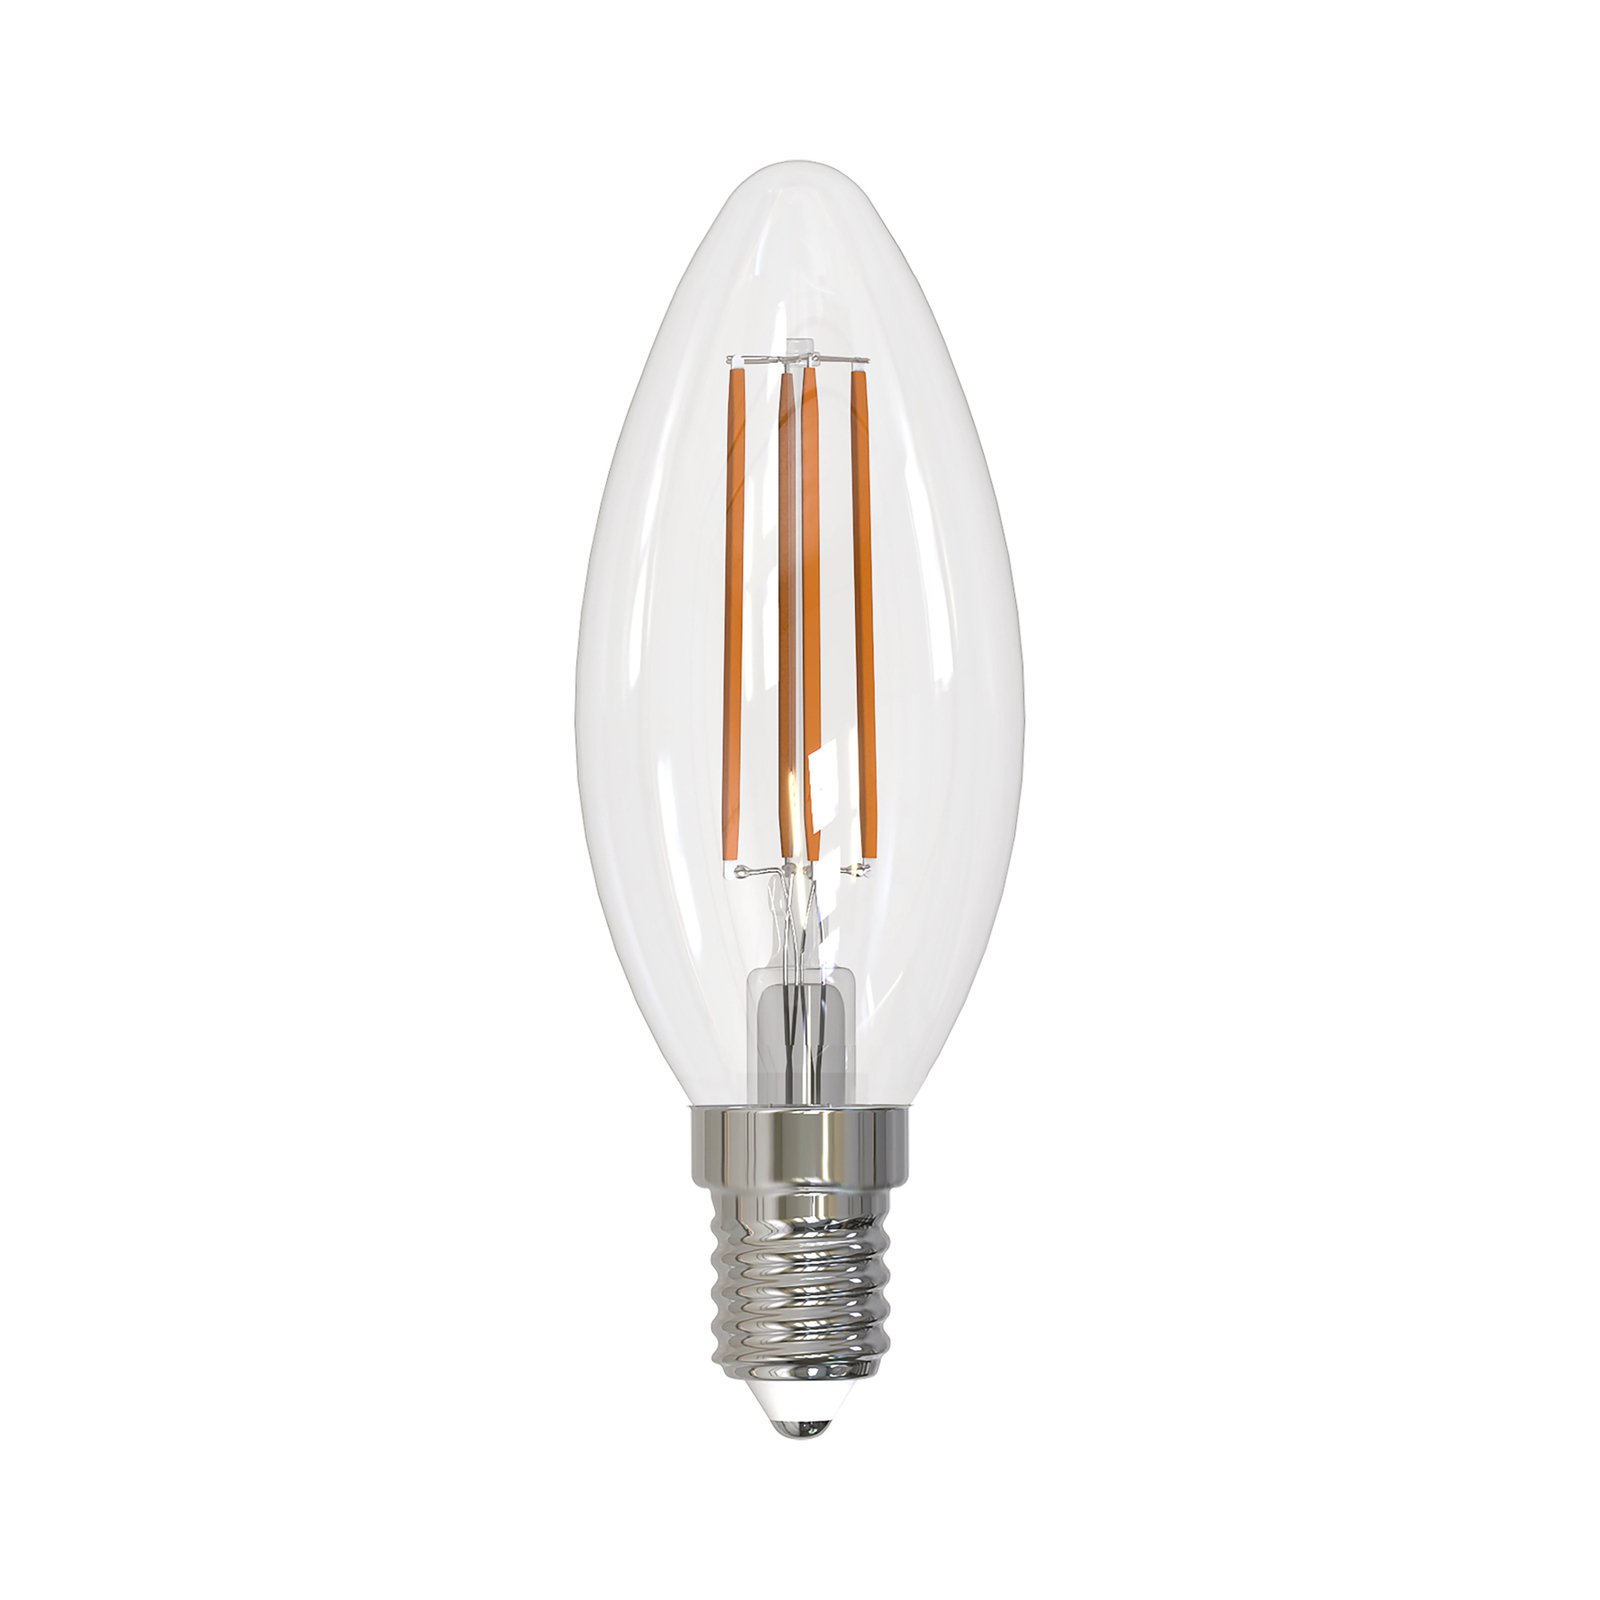 Arcchio bombilla LED con filamento E14 vela juego de 10, 3000 K